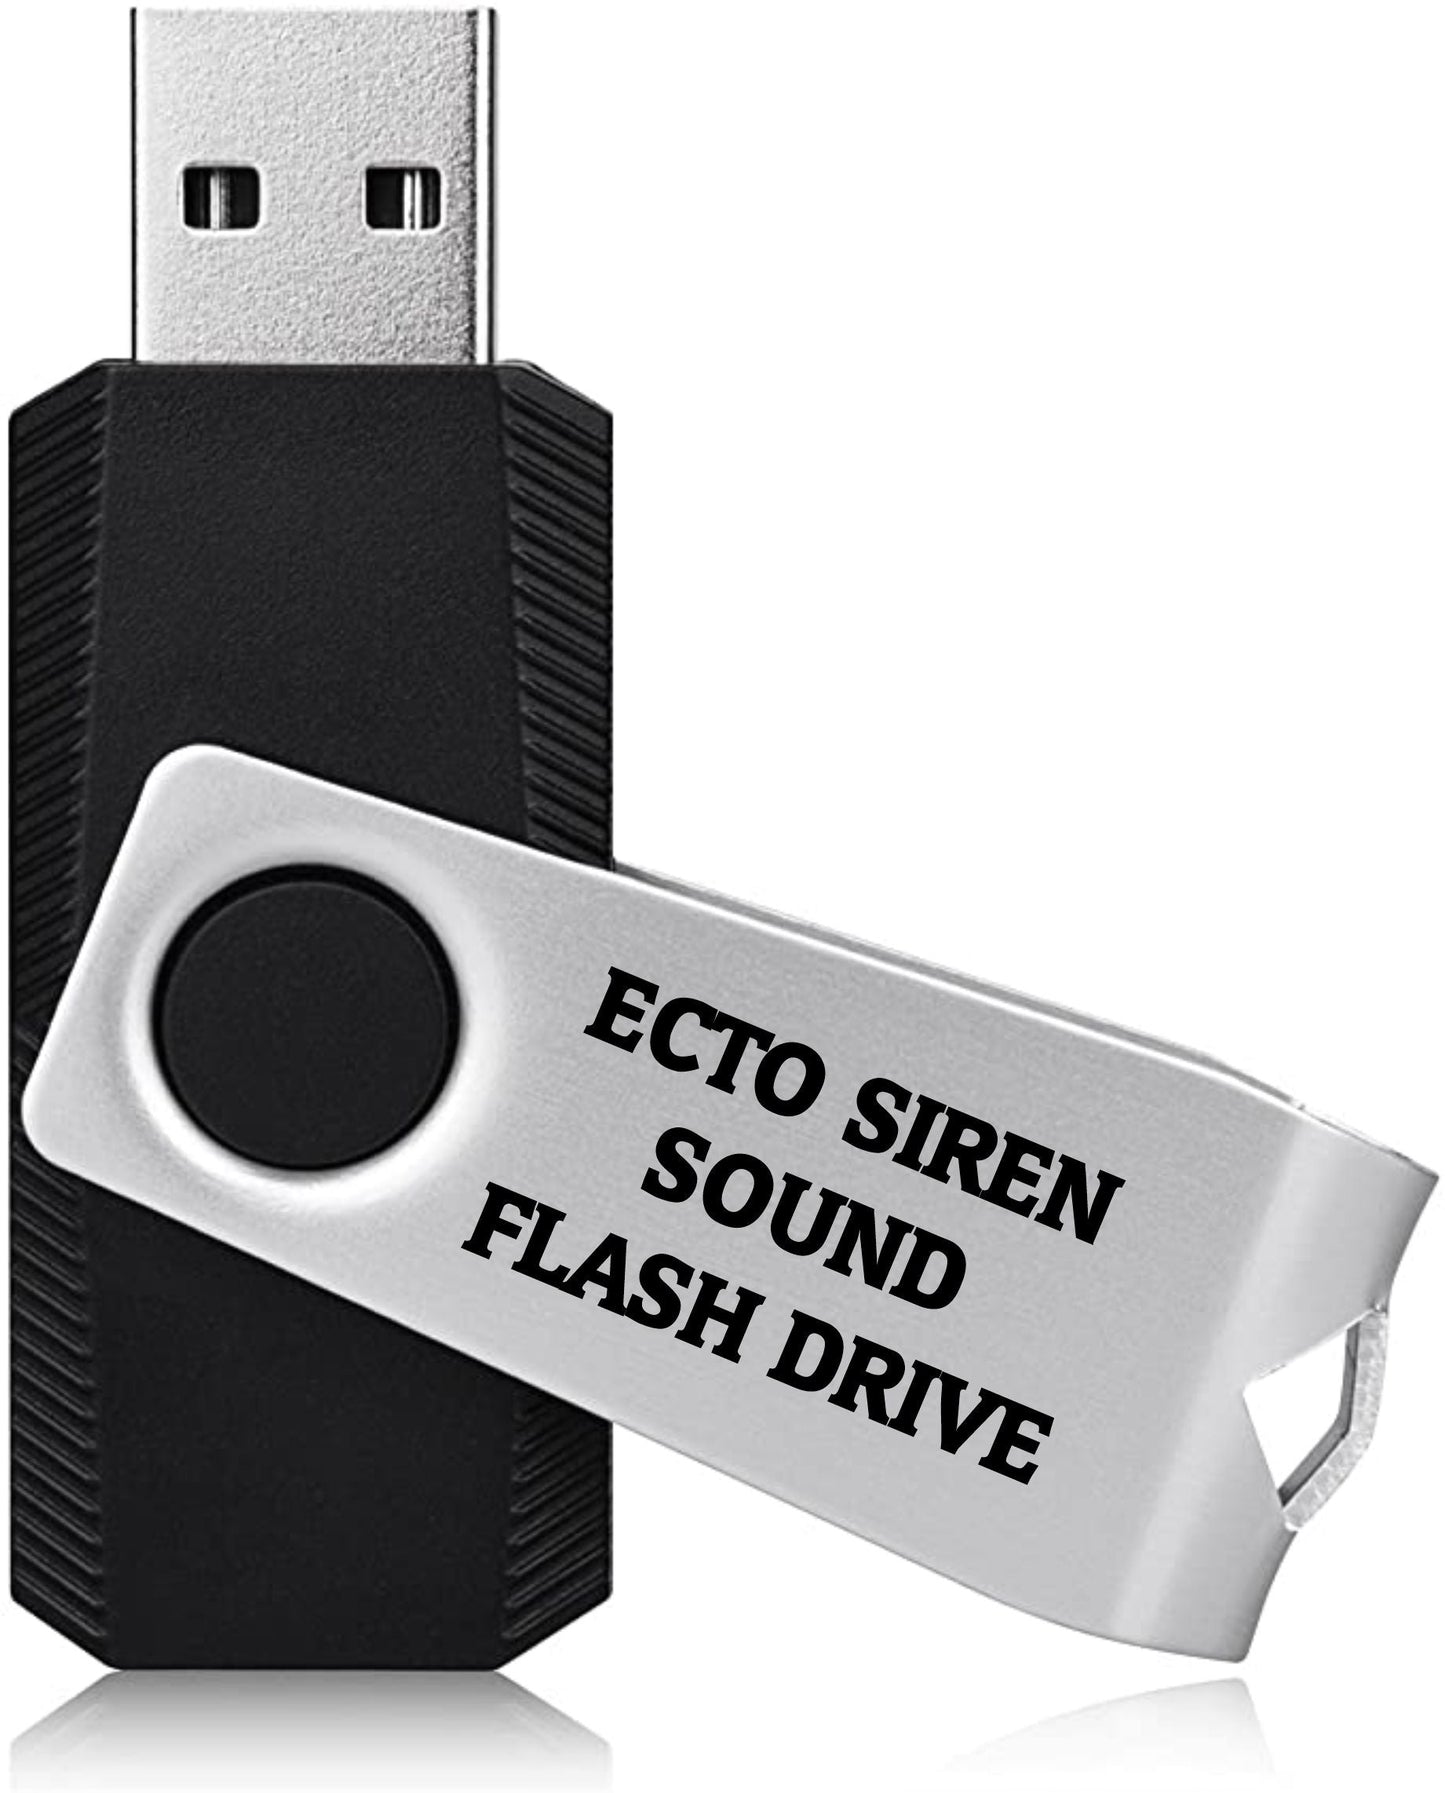 Powercall ECTO Sound Flash Drive - Powercall Sirens LLC